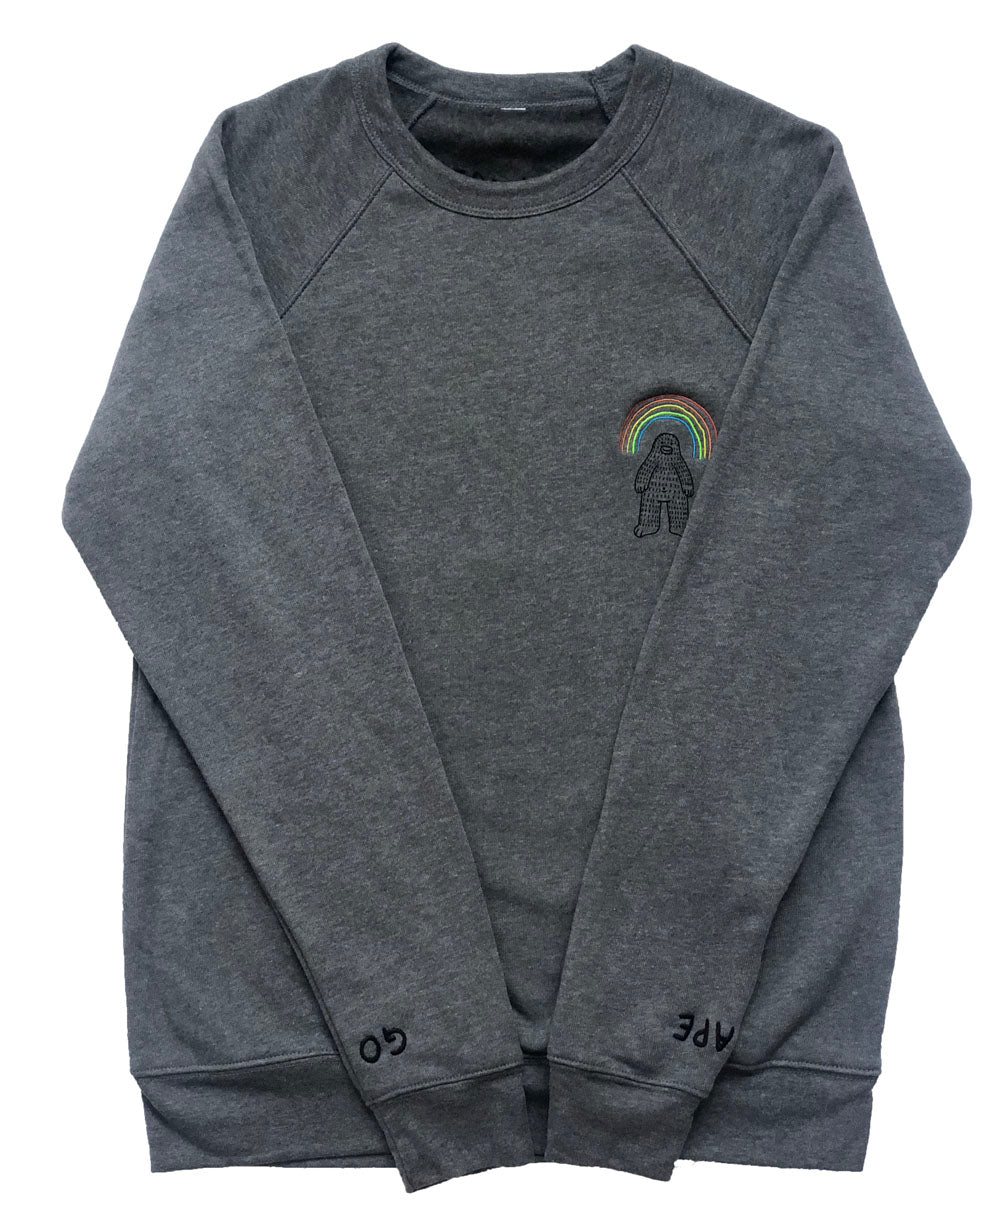 Go Ape - Rainbow Embroidered Crewneck Sweatshirt